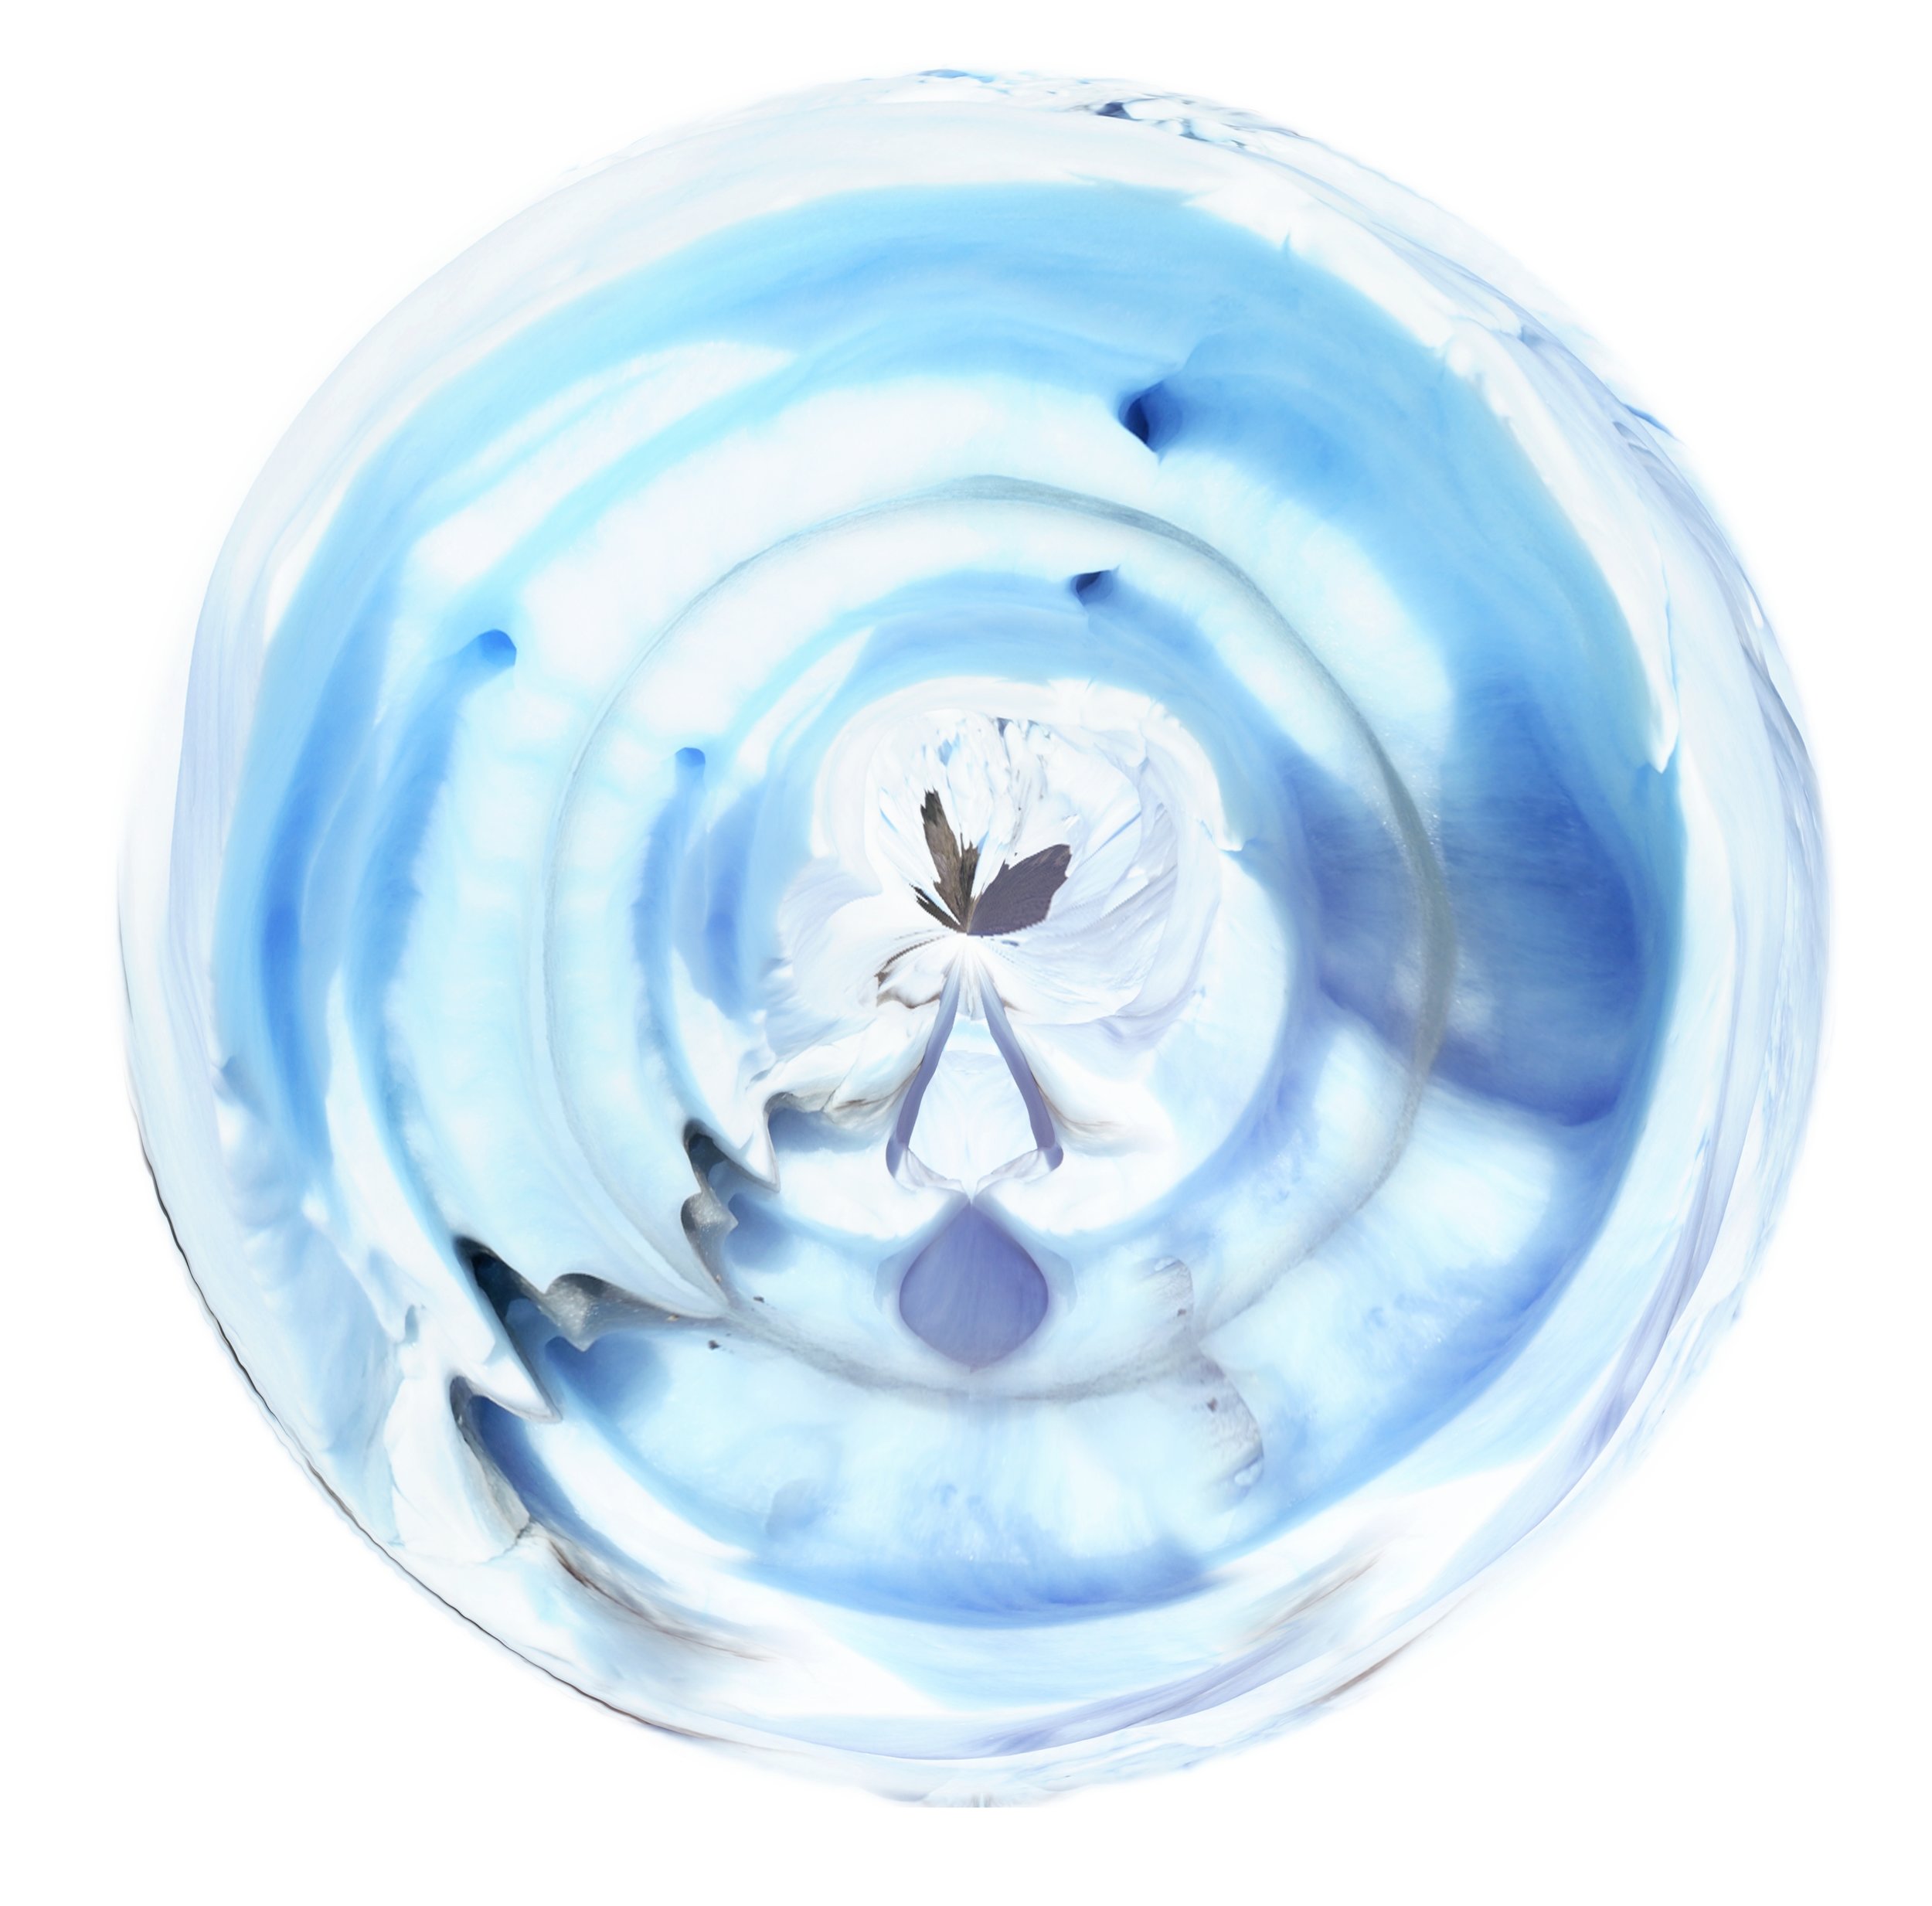 ice bubble 006.JPG